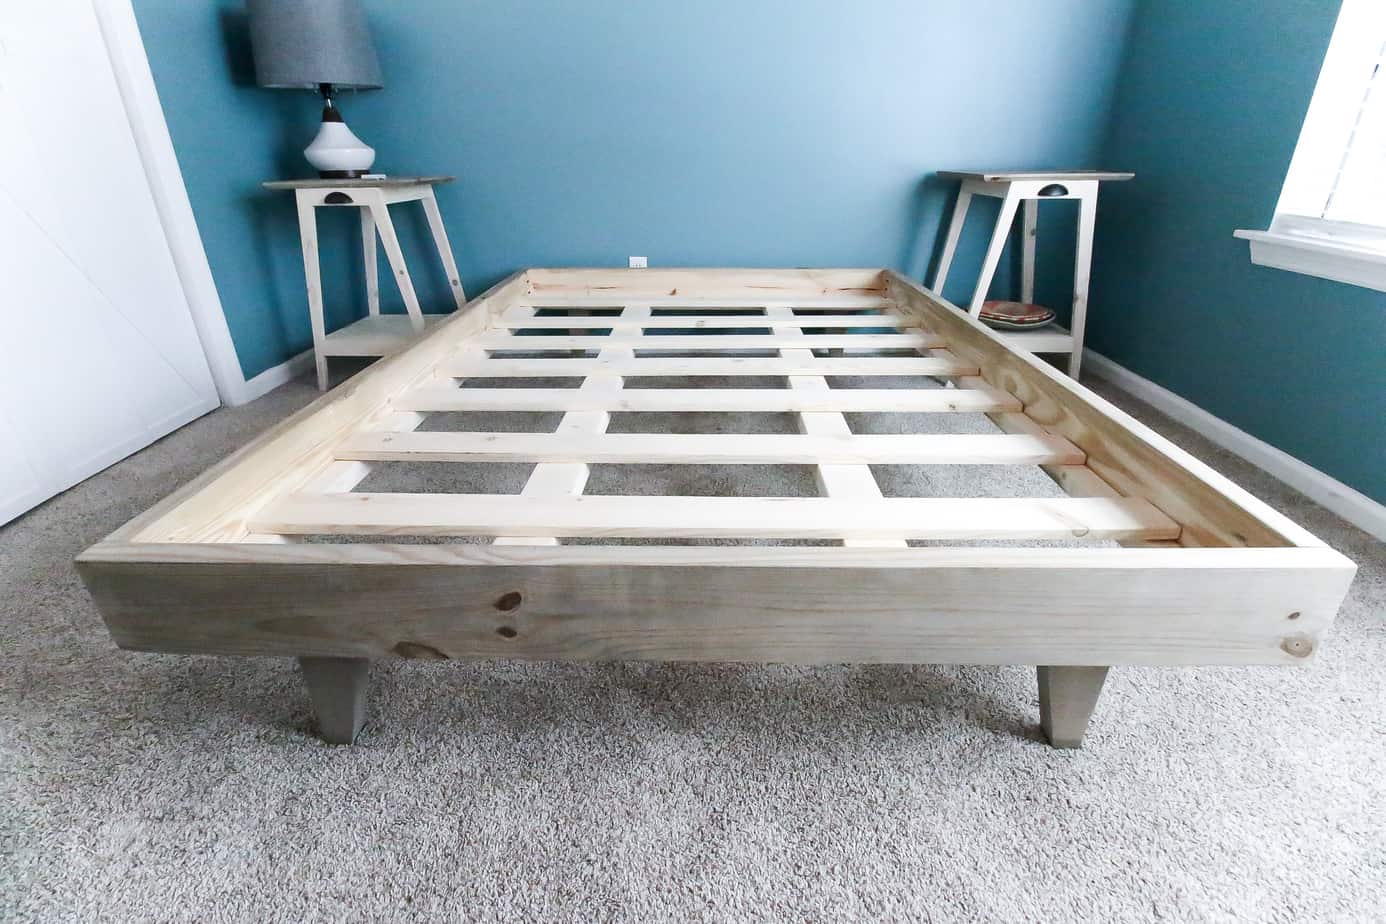 How To Build A Platform Bed For 50, How To Build Platform Bed Frame King Size